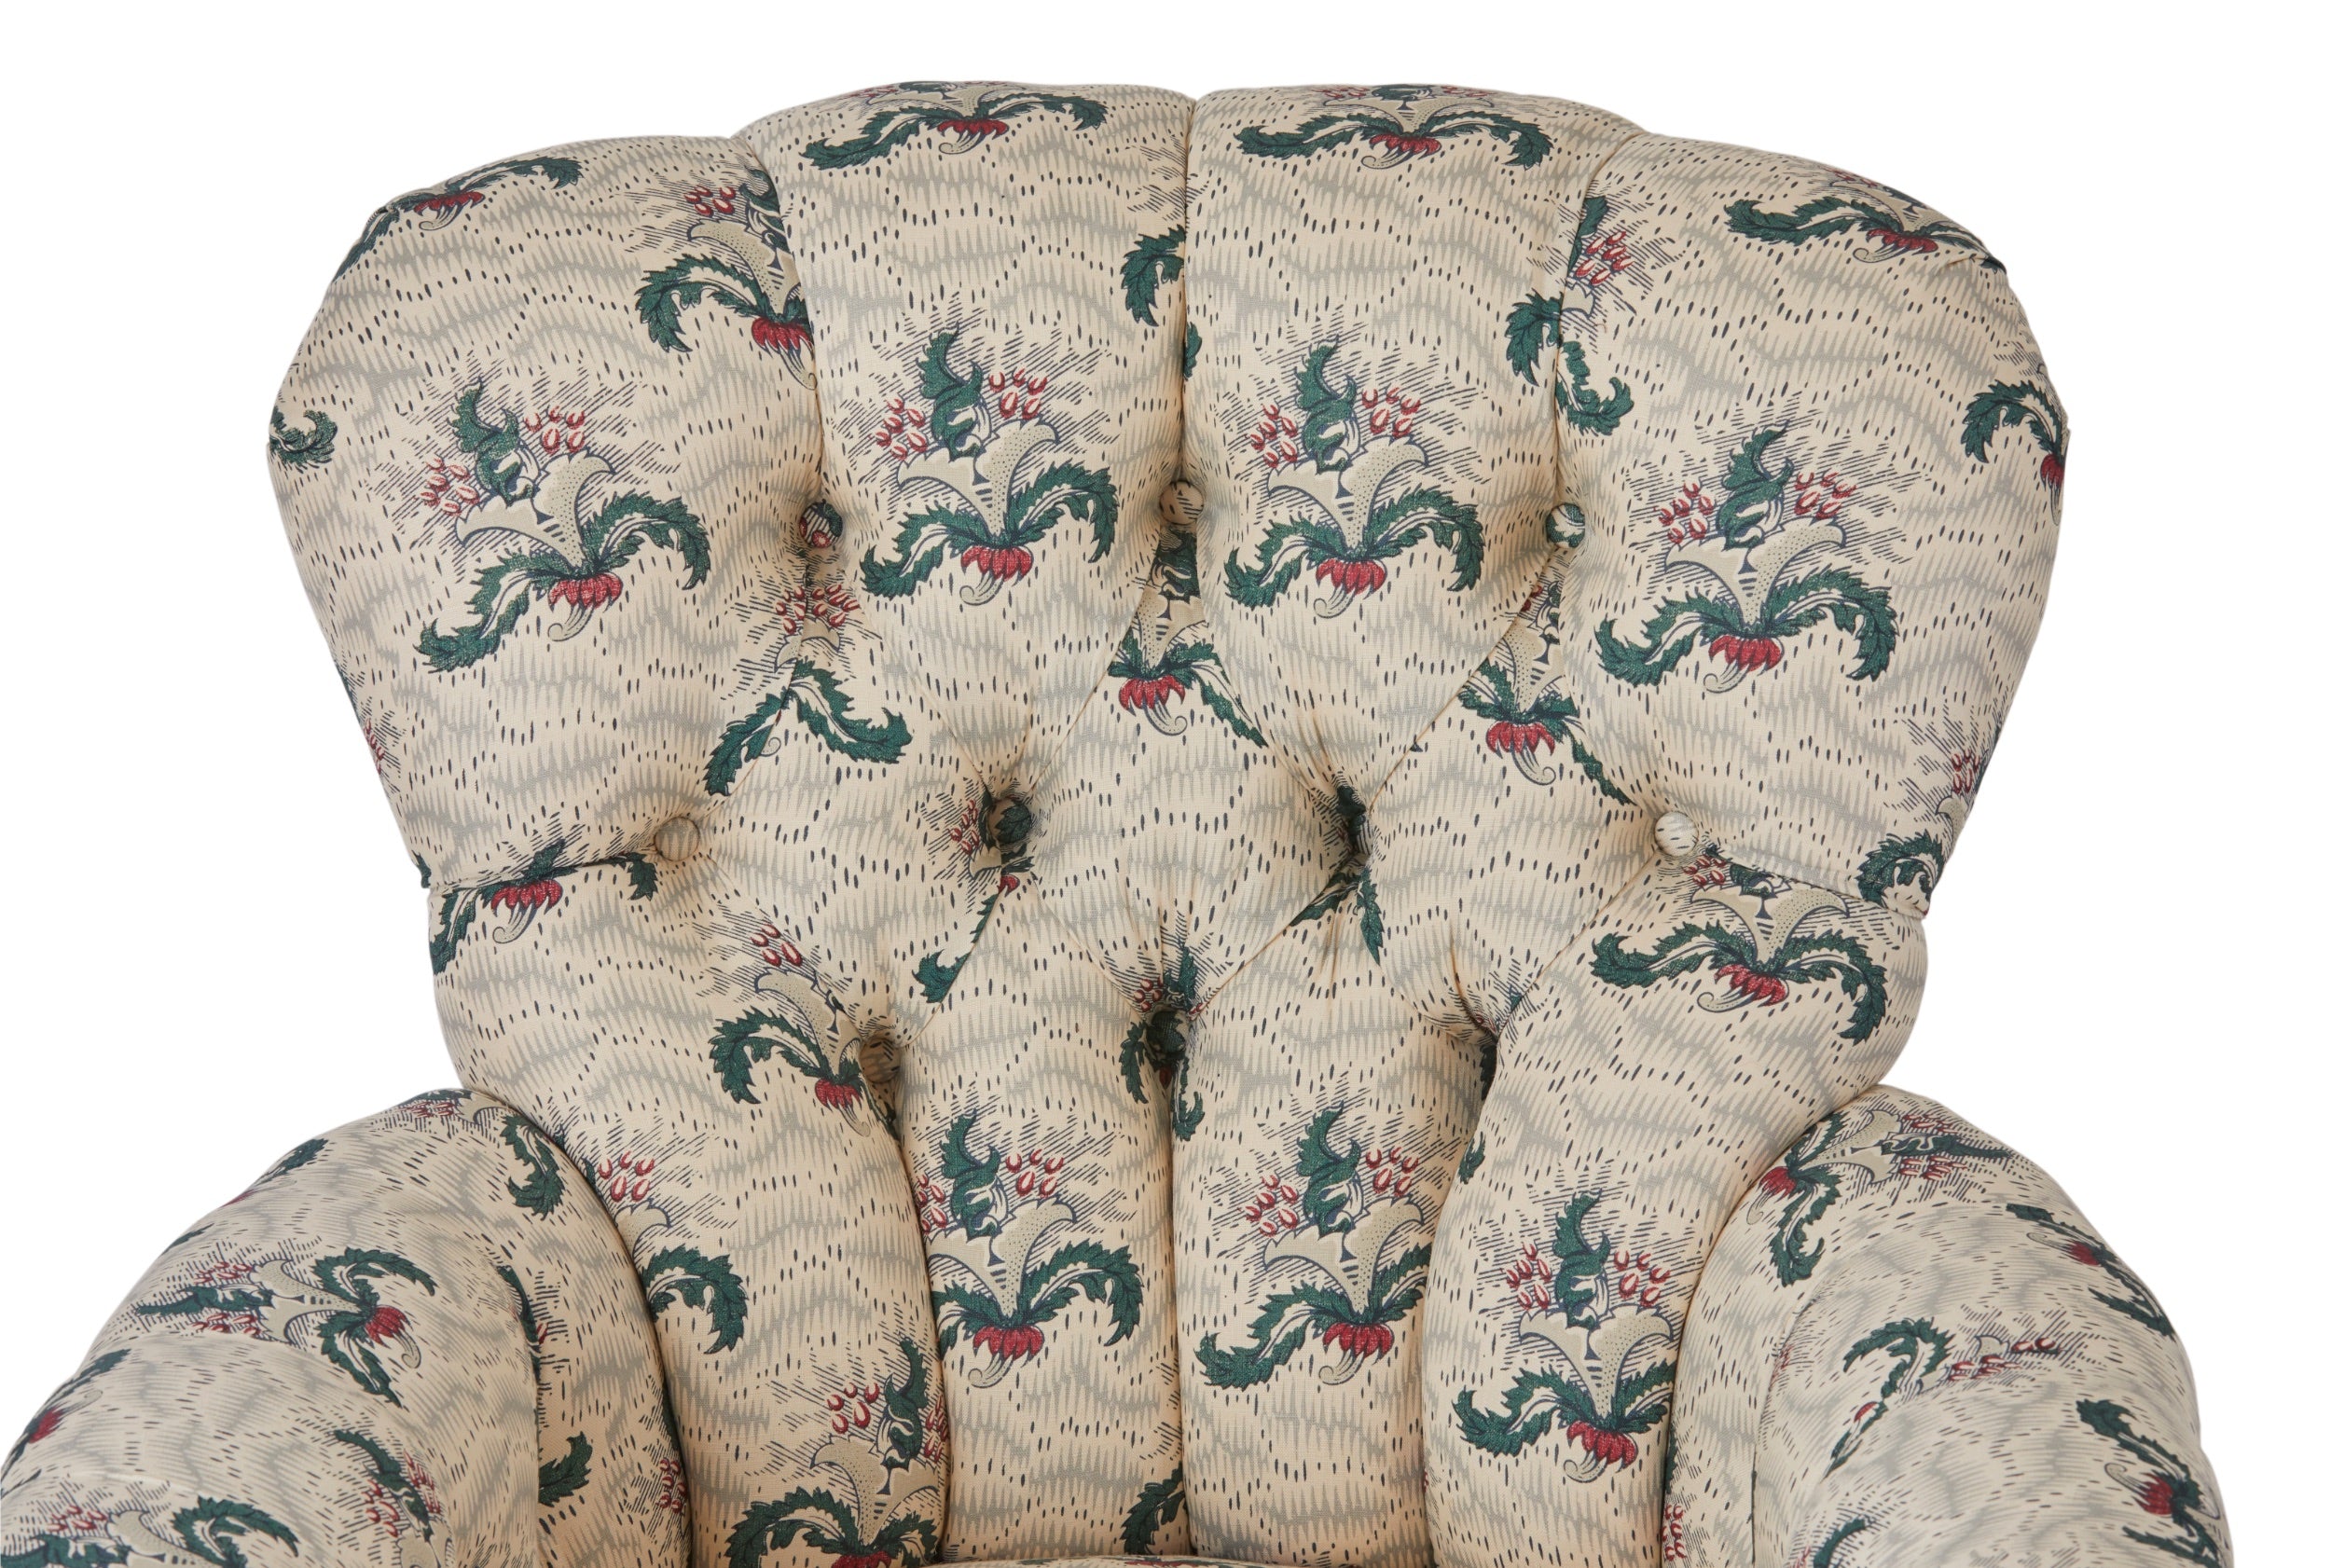 A 19th Century Irish Armchair in Flora Soames Daphne Linen